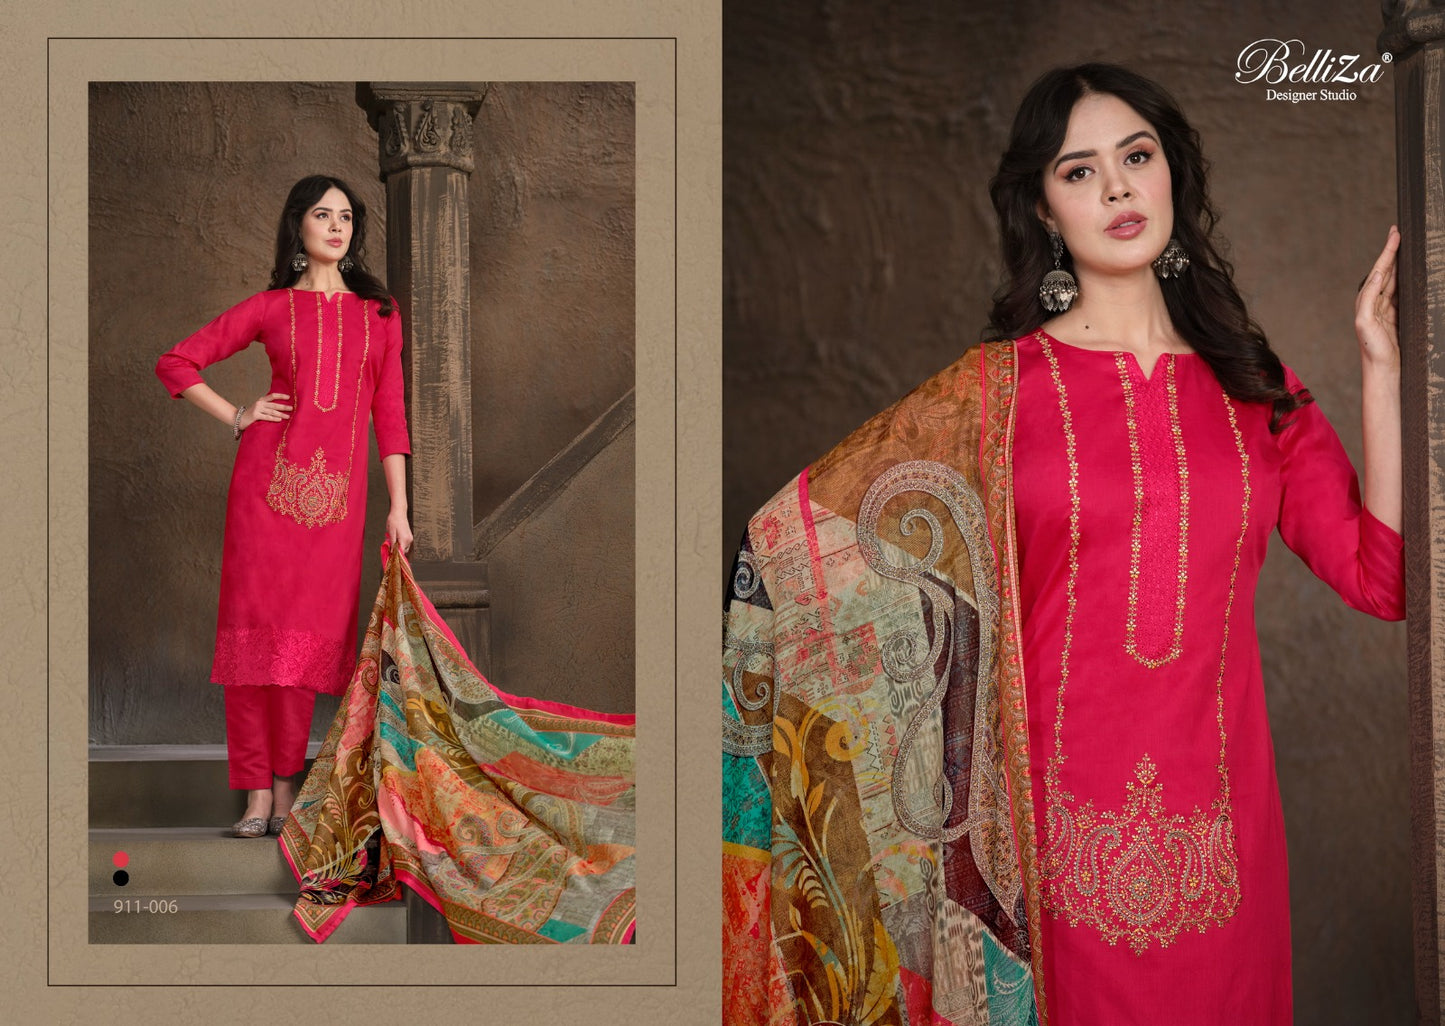 Jashn E Ishq Vol 7 Belliza Designer Studio Heavy Jaam Karachi Salwar Suits